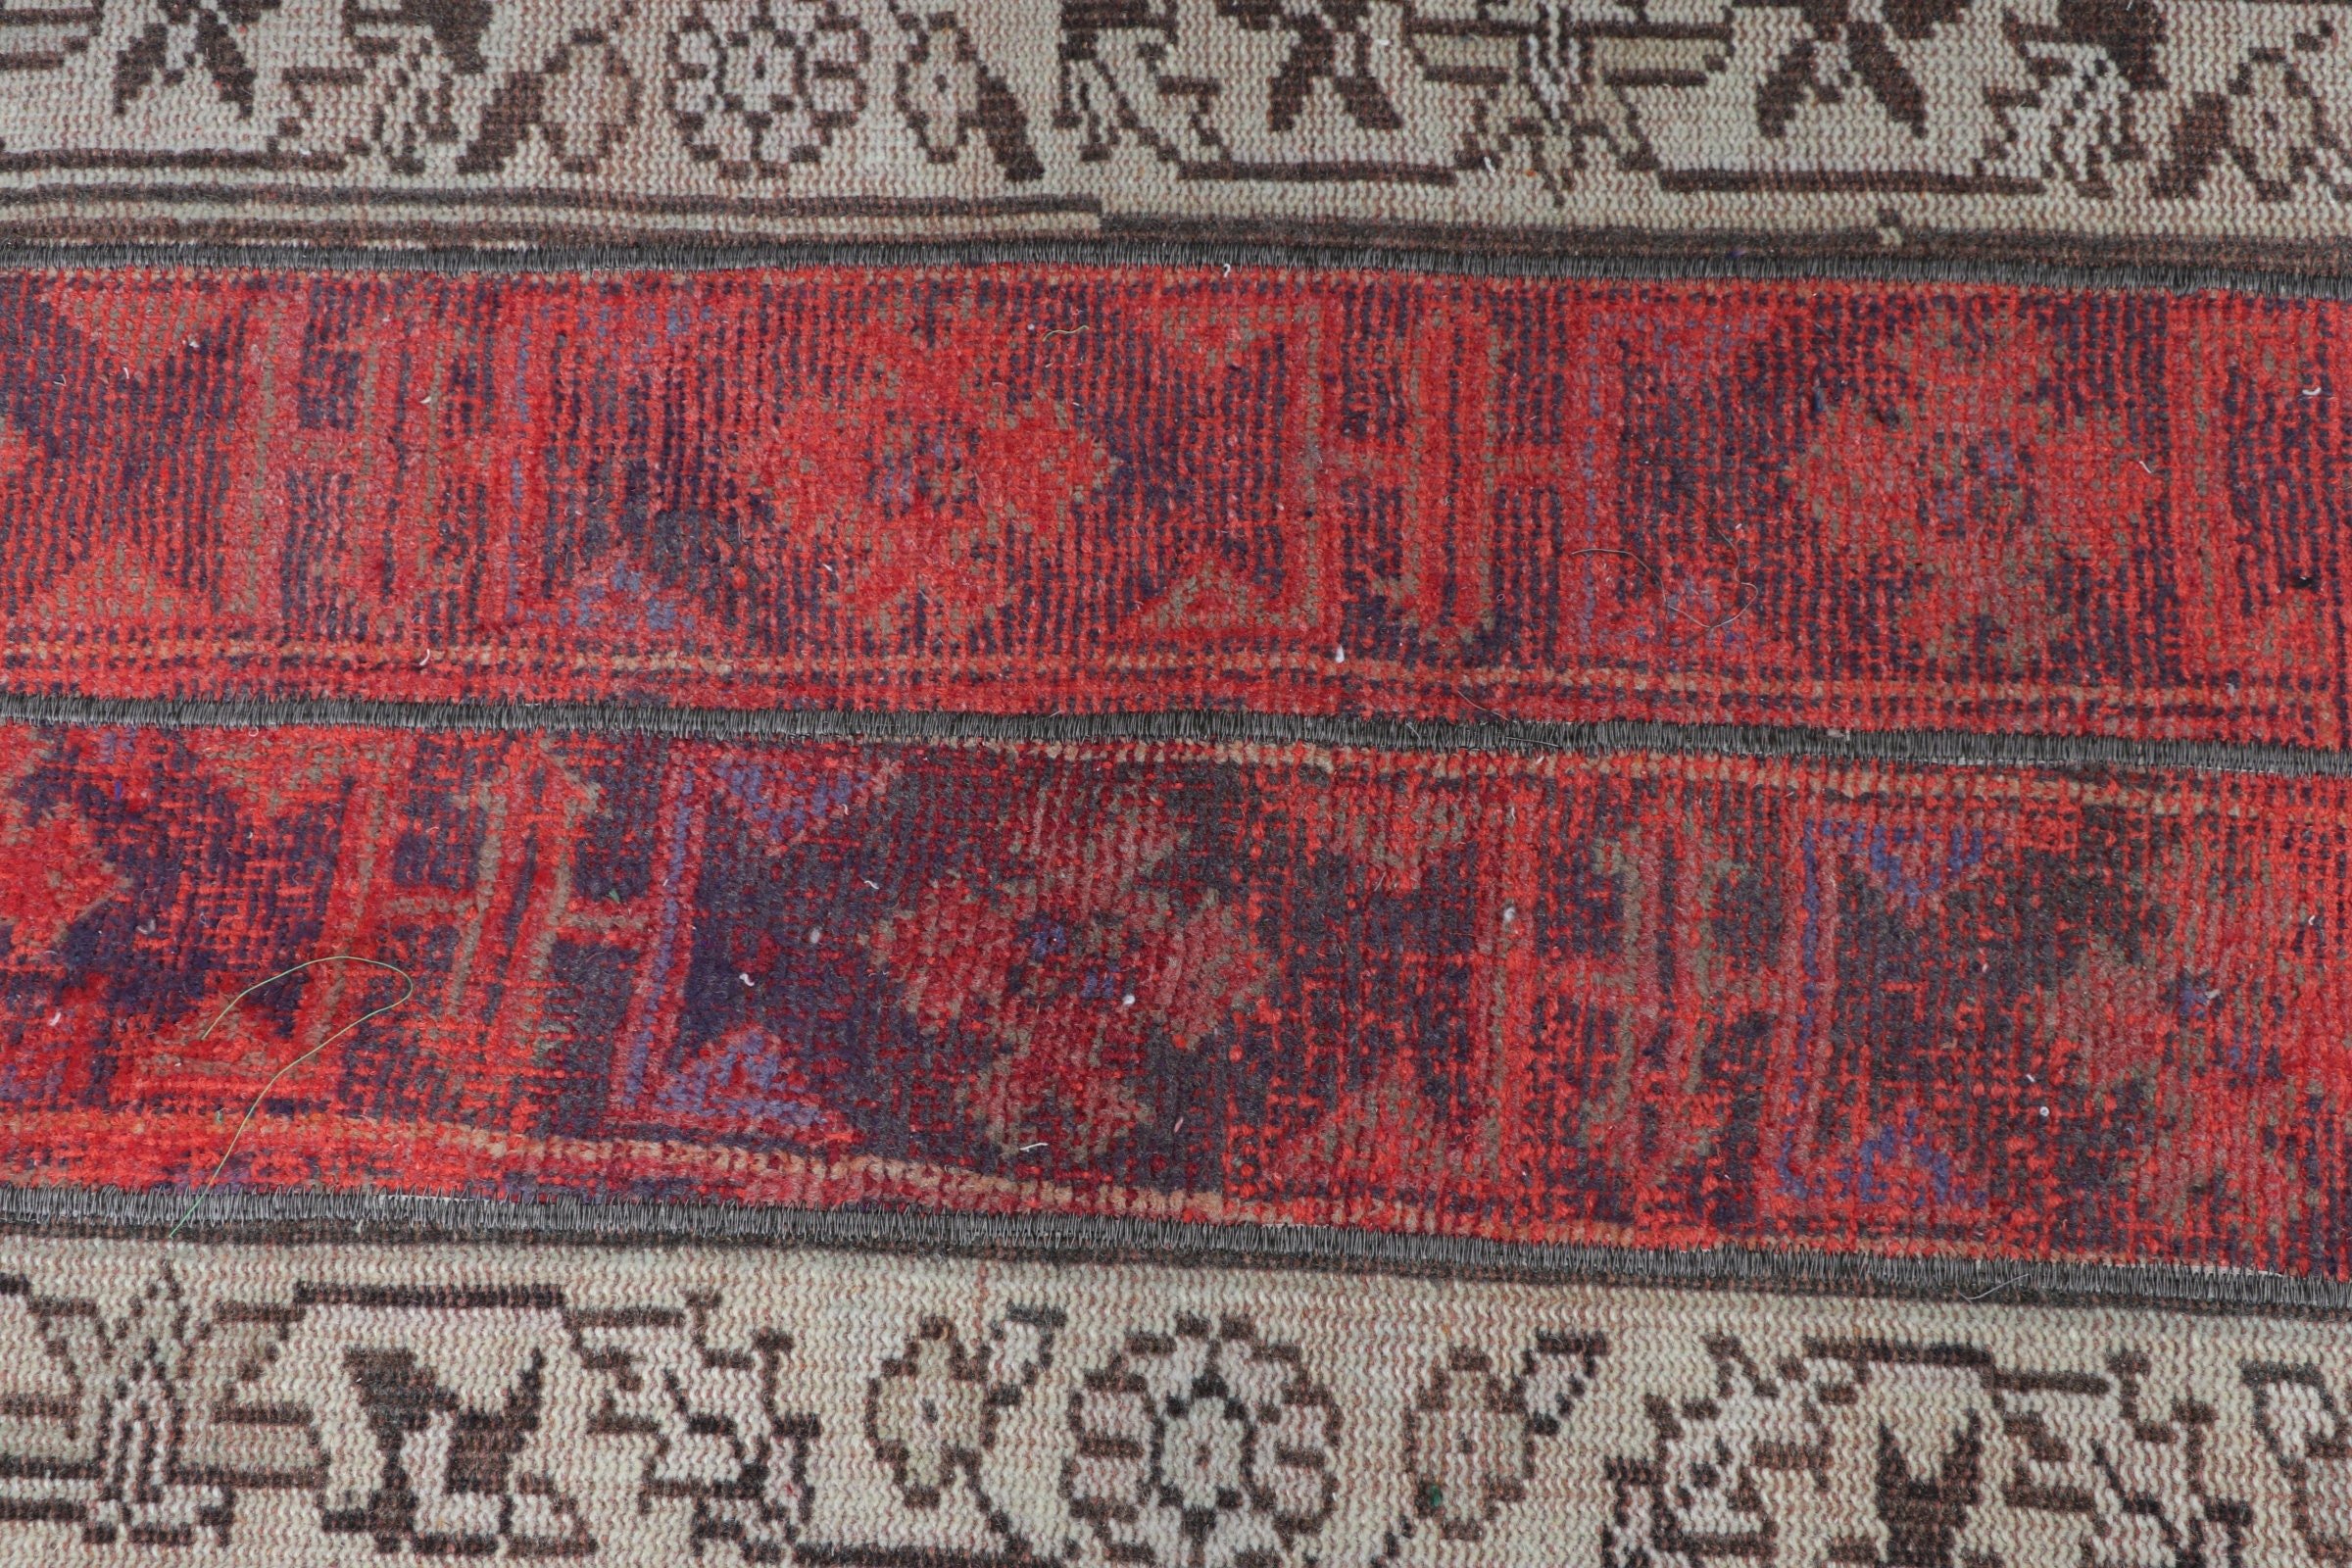 Turkish Rug, Red  2.3x3.7 ft Small Rug, Tribal Rug, Antique Rug, Vintage Rug, Wall Hanging Rugs, Bedroom Rugs, Bath Rug